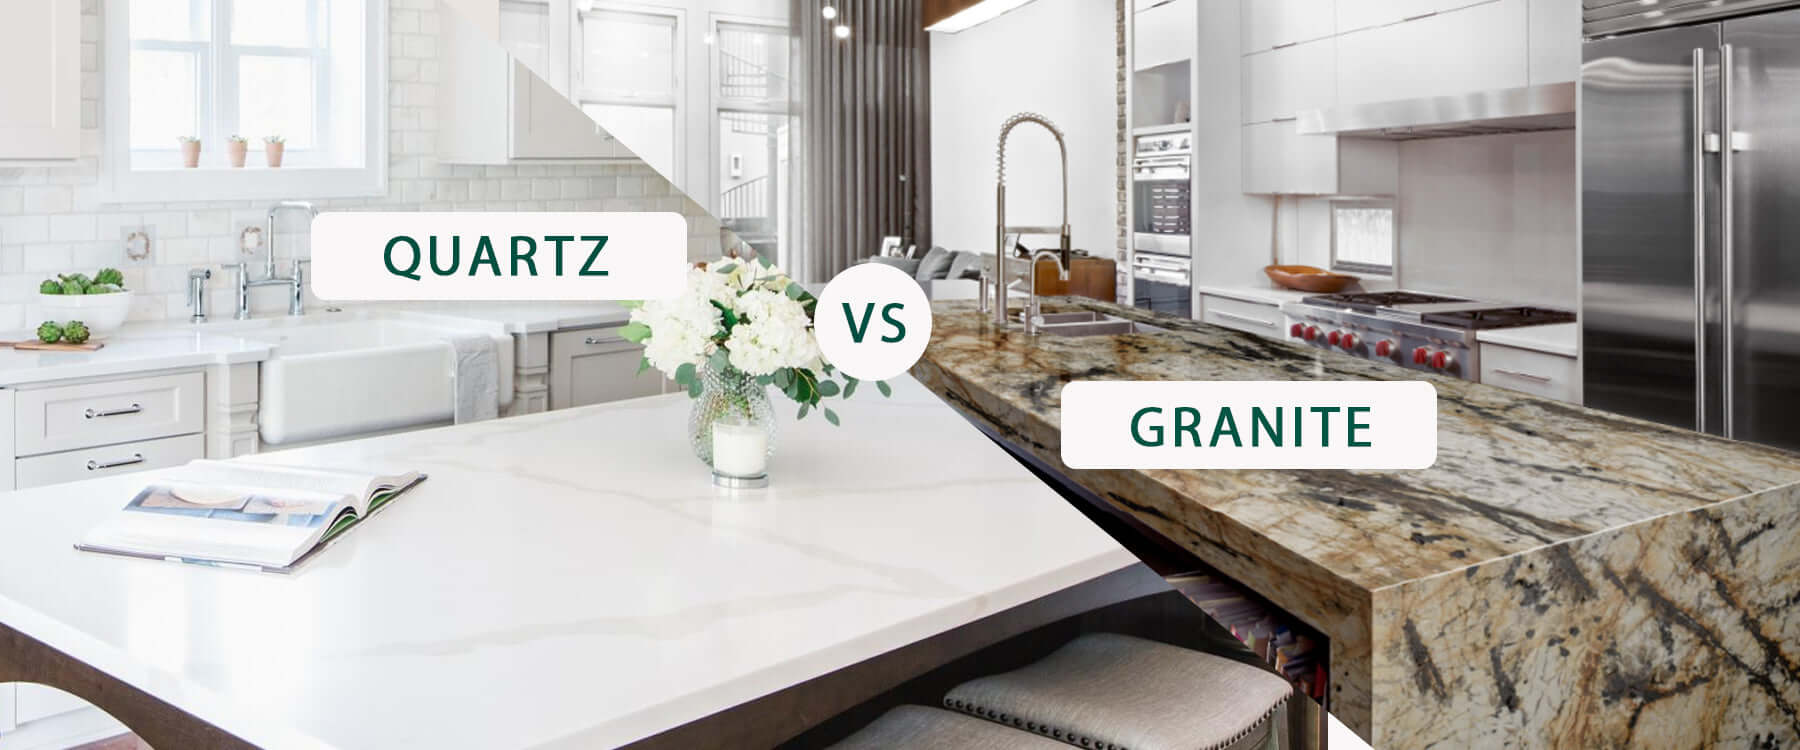 Which worktop is cost effective? Granite or Quartz– www.work-tops.com